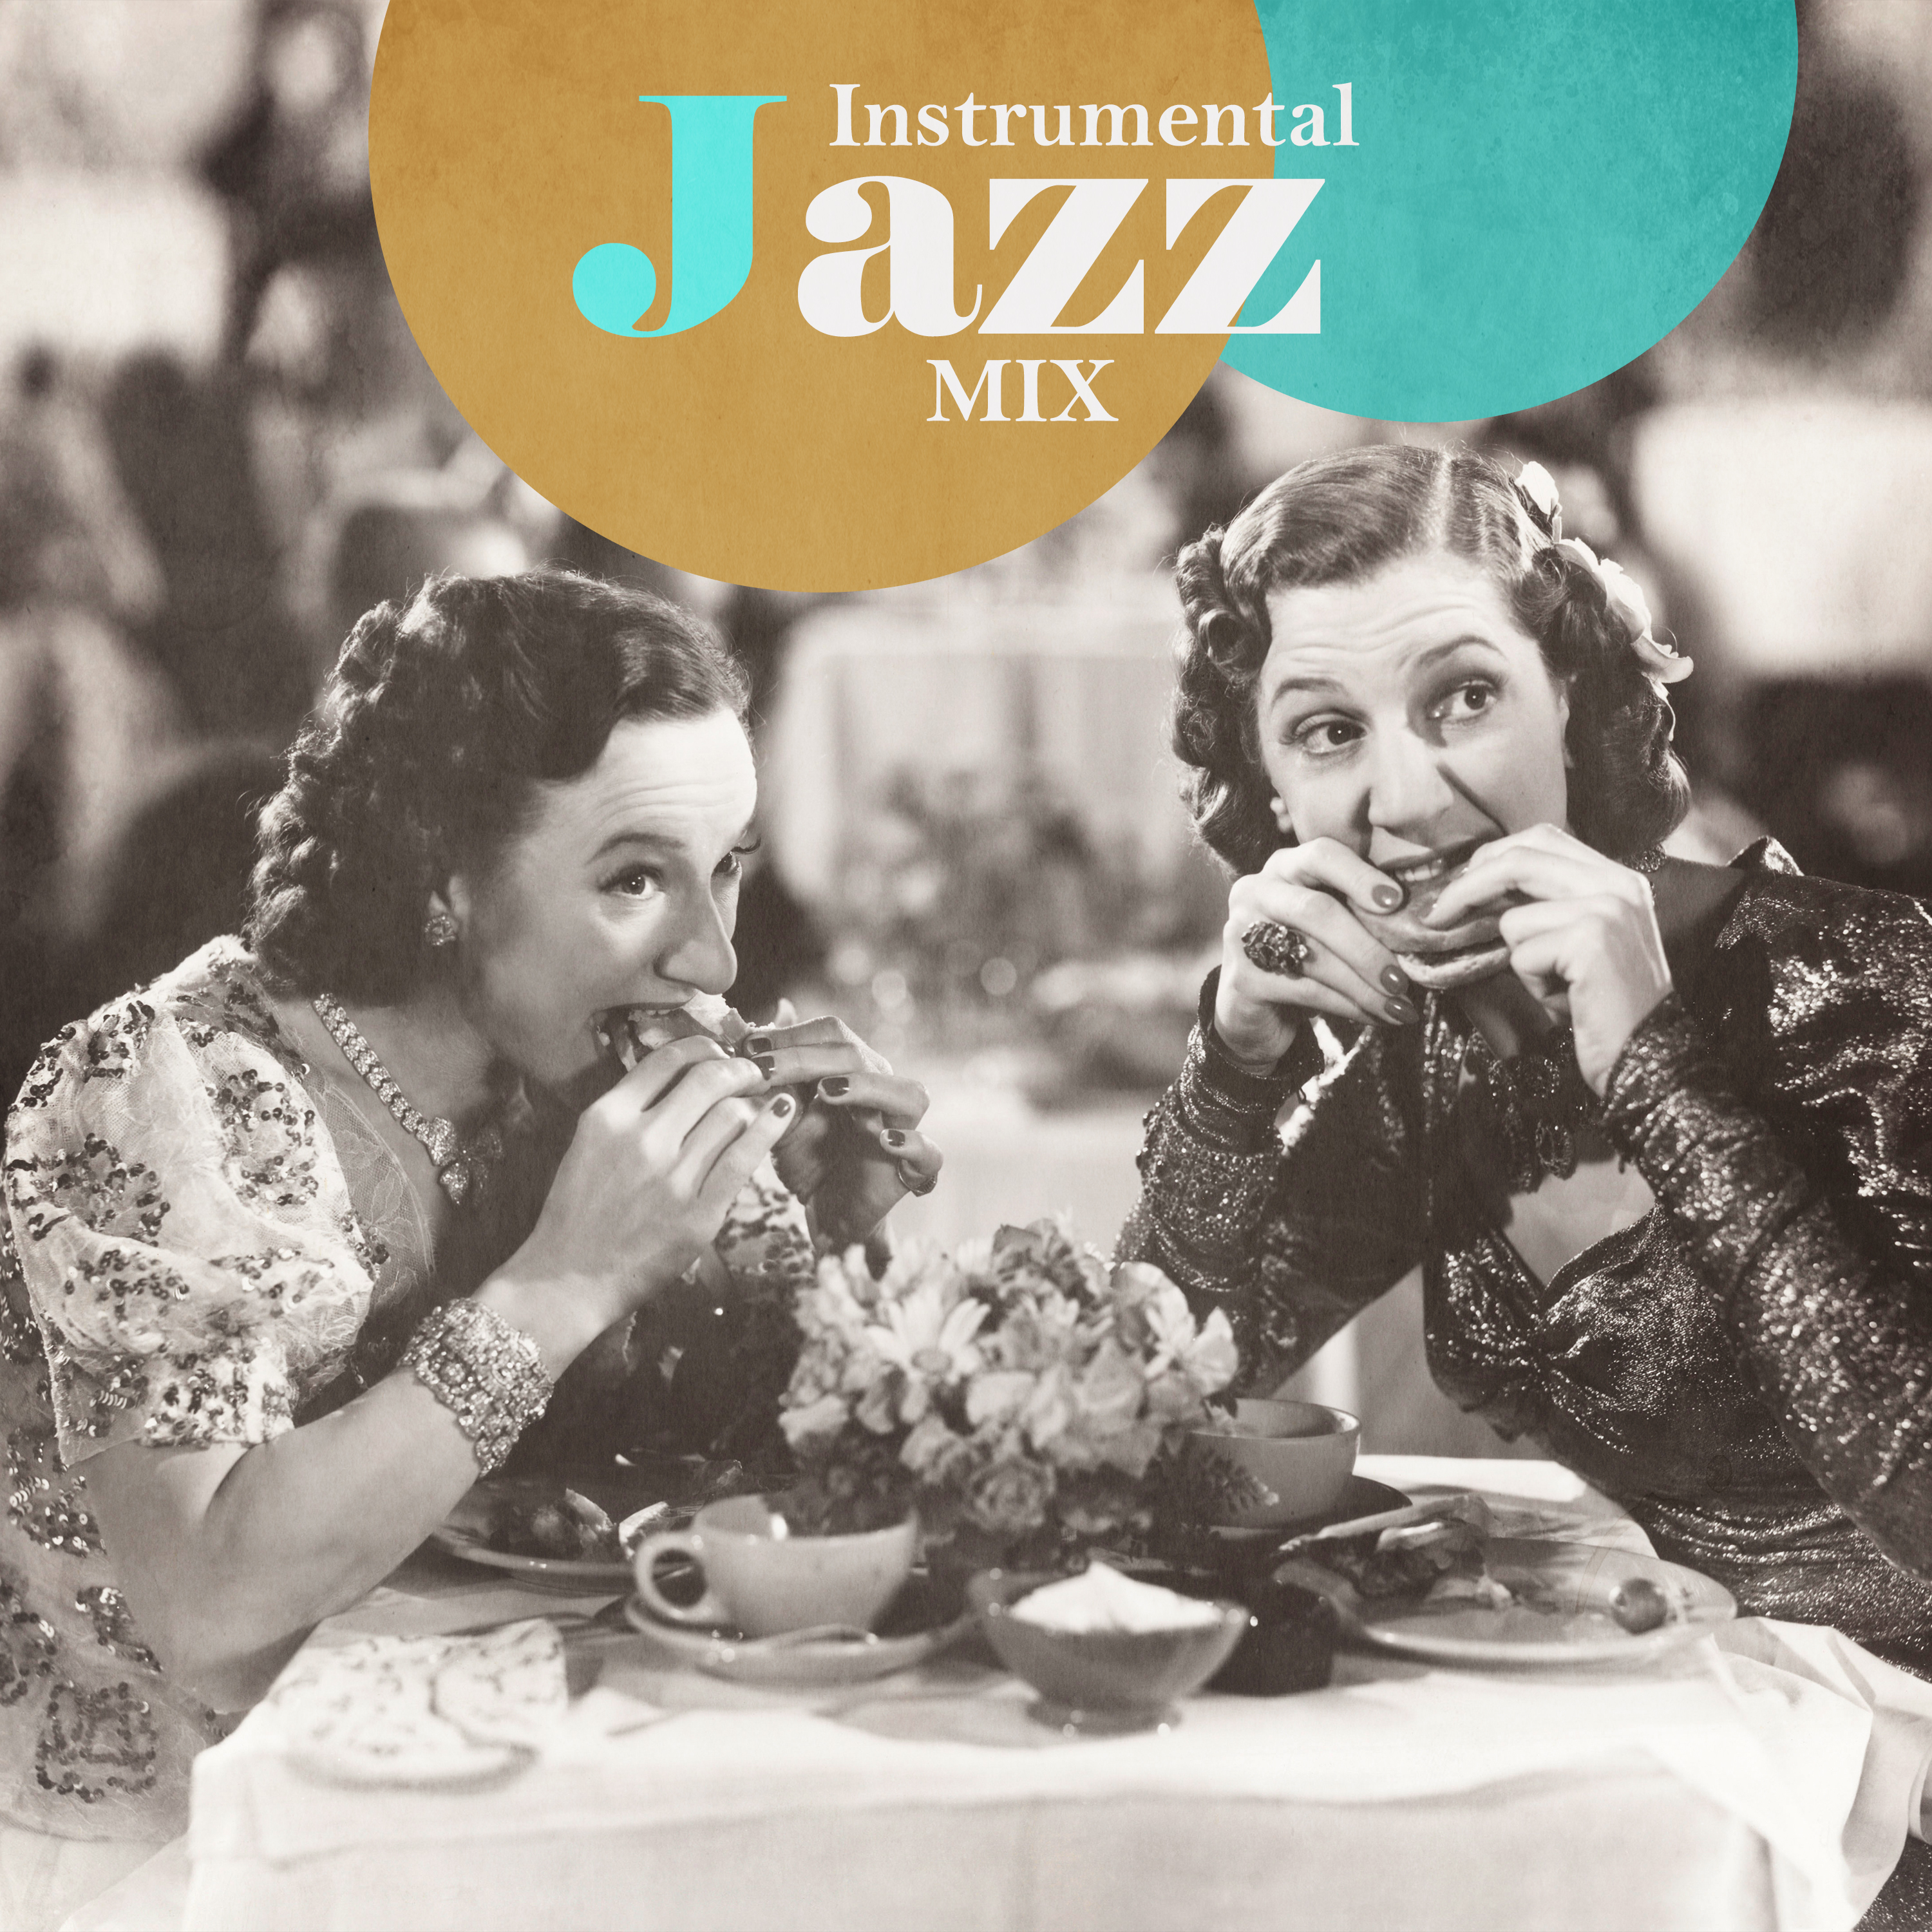 Instrumental Jazz Mix - Smooth & Swing Jazz Background Music, Instrumental Songs, Relaxing Dinner, Bar & Restaurants, Chill Jazz Lounge